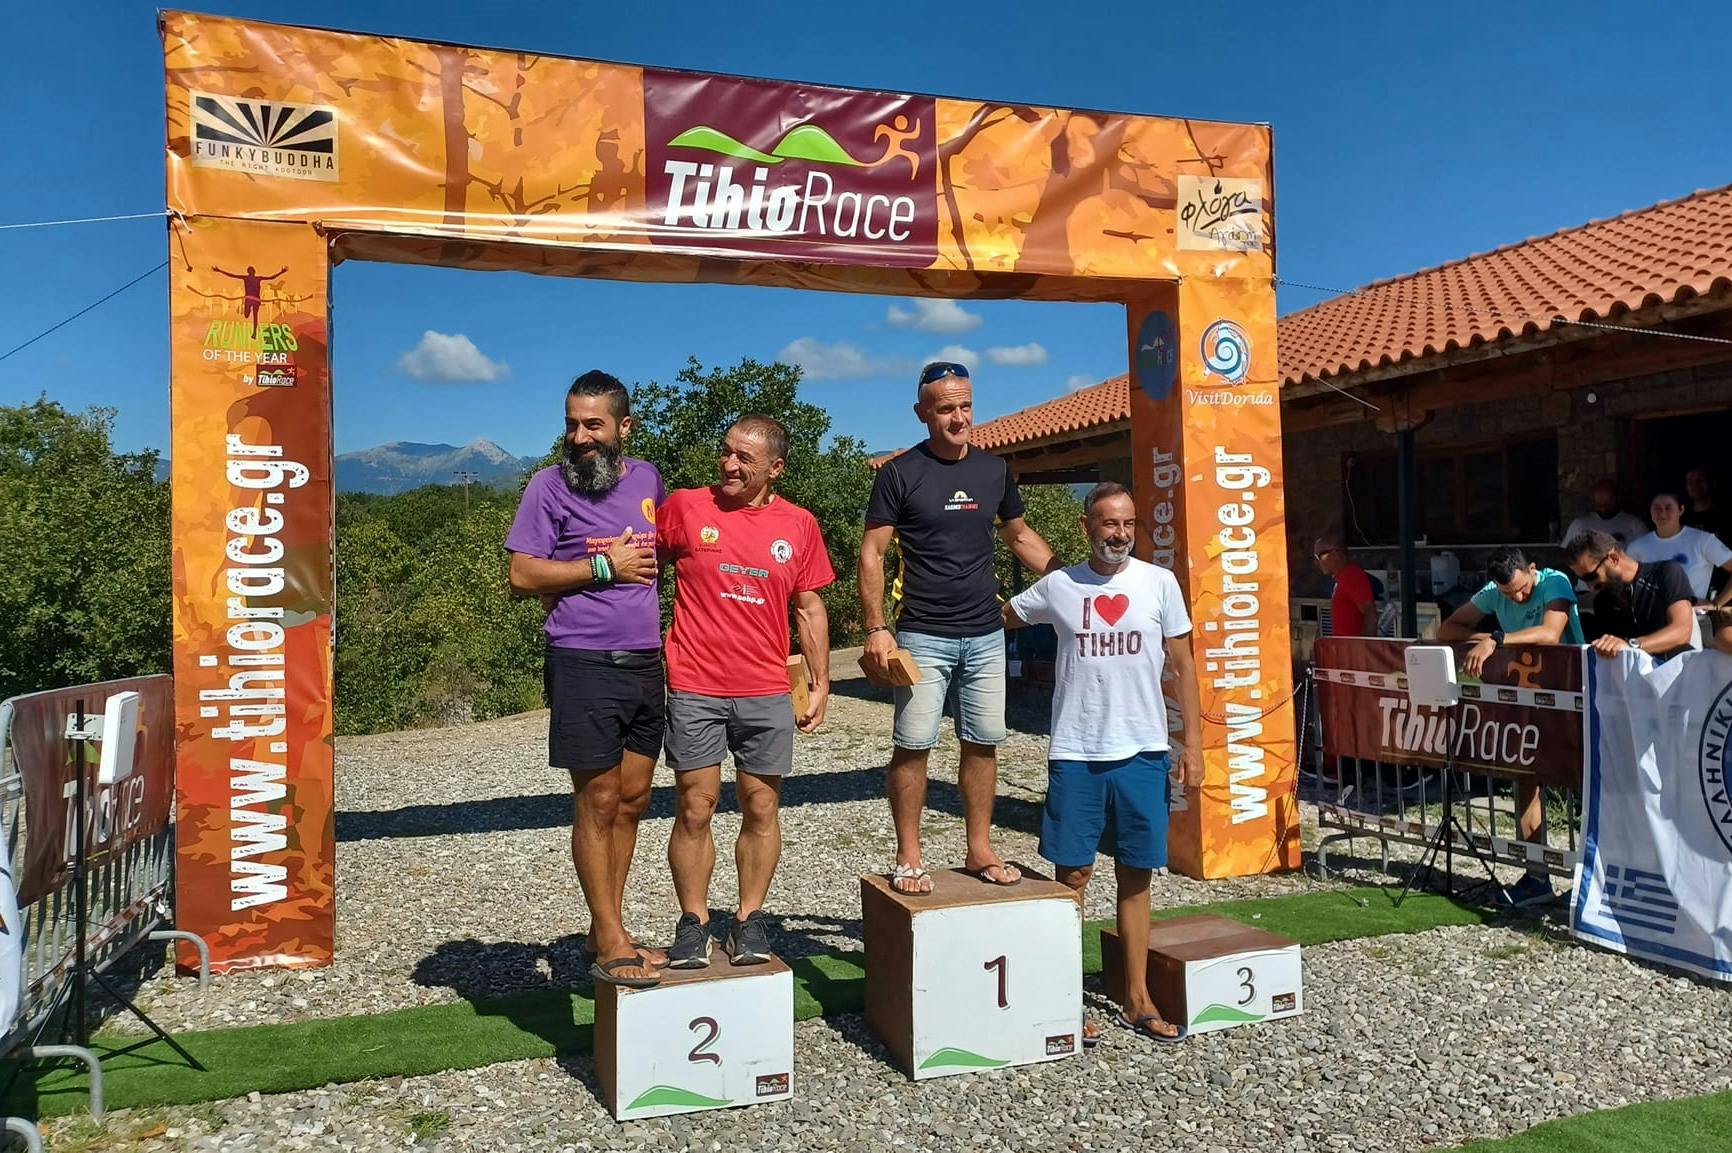 Tihio Race: Πραγματοποιήθηκαν οι απονομές των αγώνων 250 και 165 χιλιομέτρων (Pics)